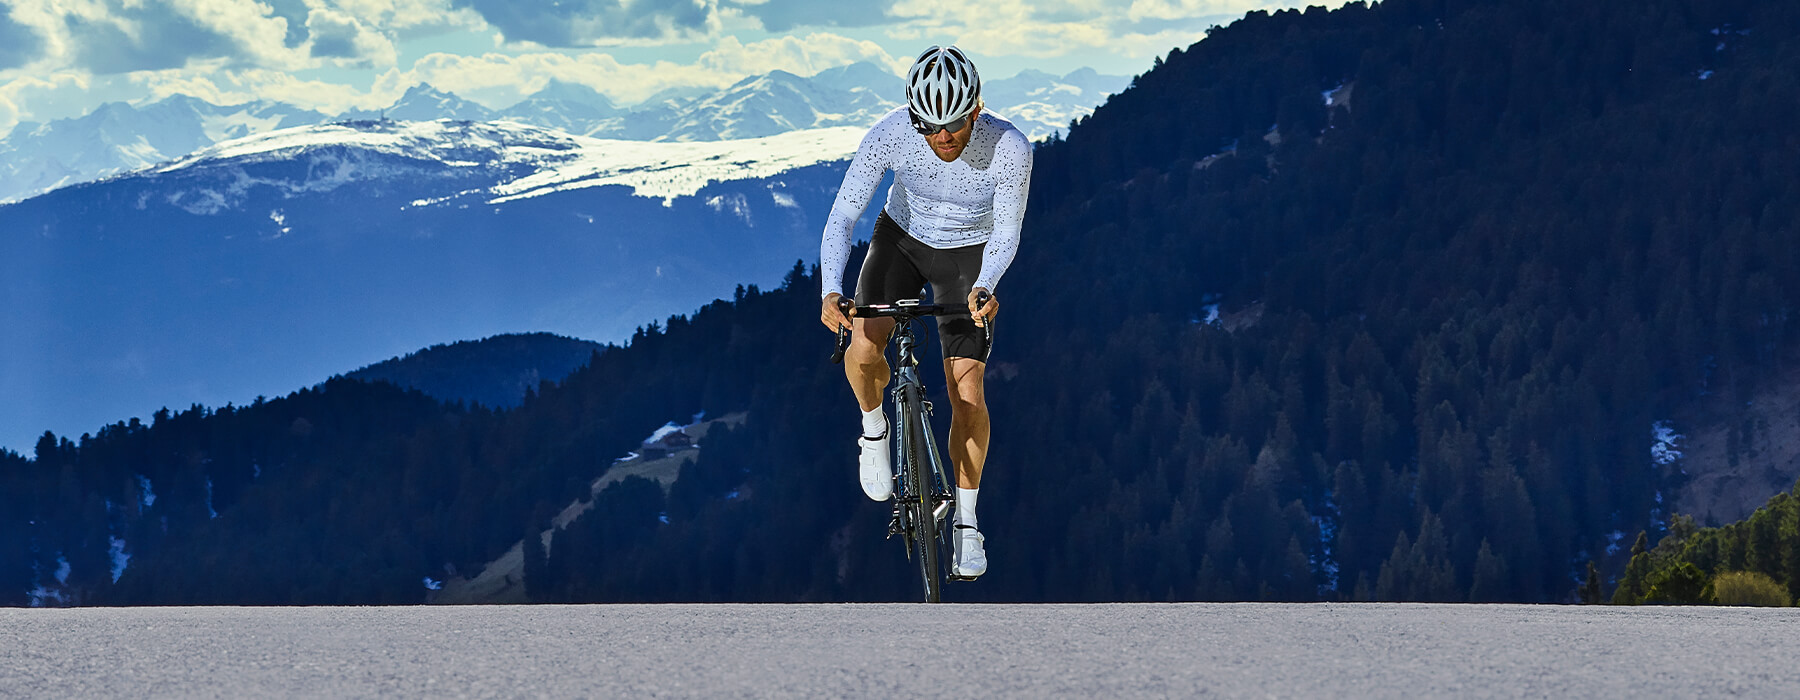 Qué eres más de ciclismo de carretera o de montaña? - Garmin Blog